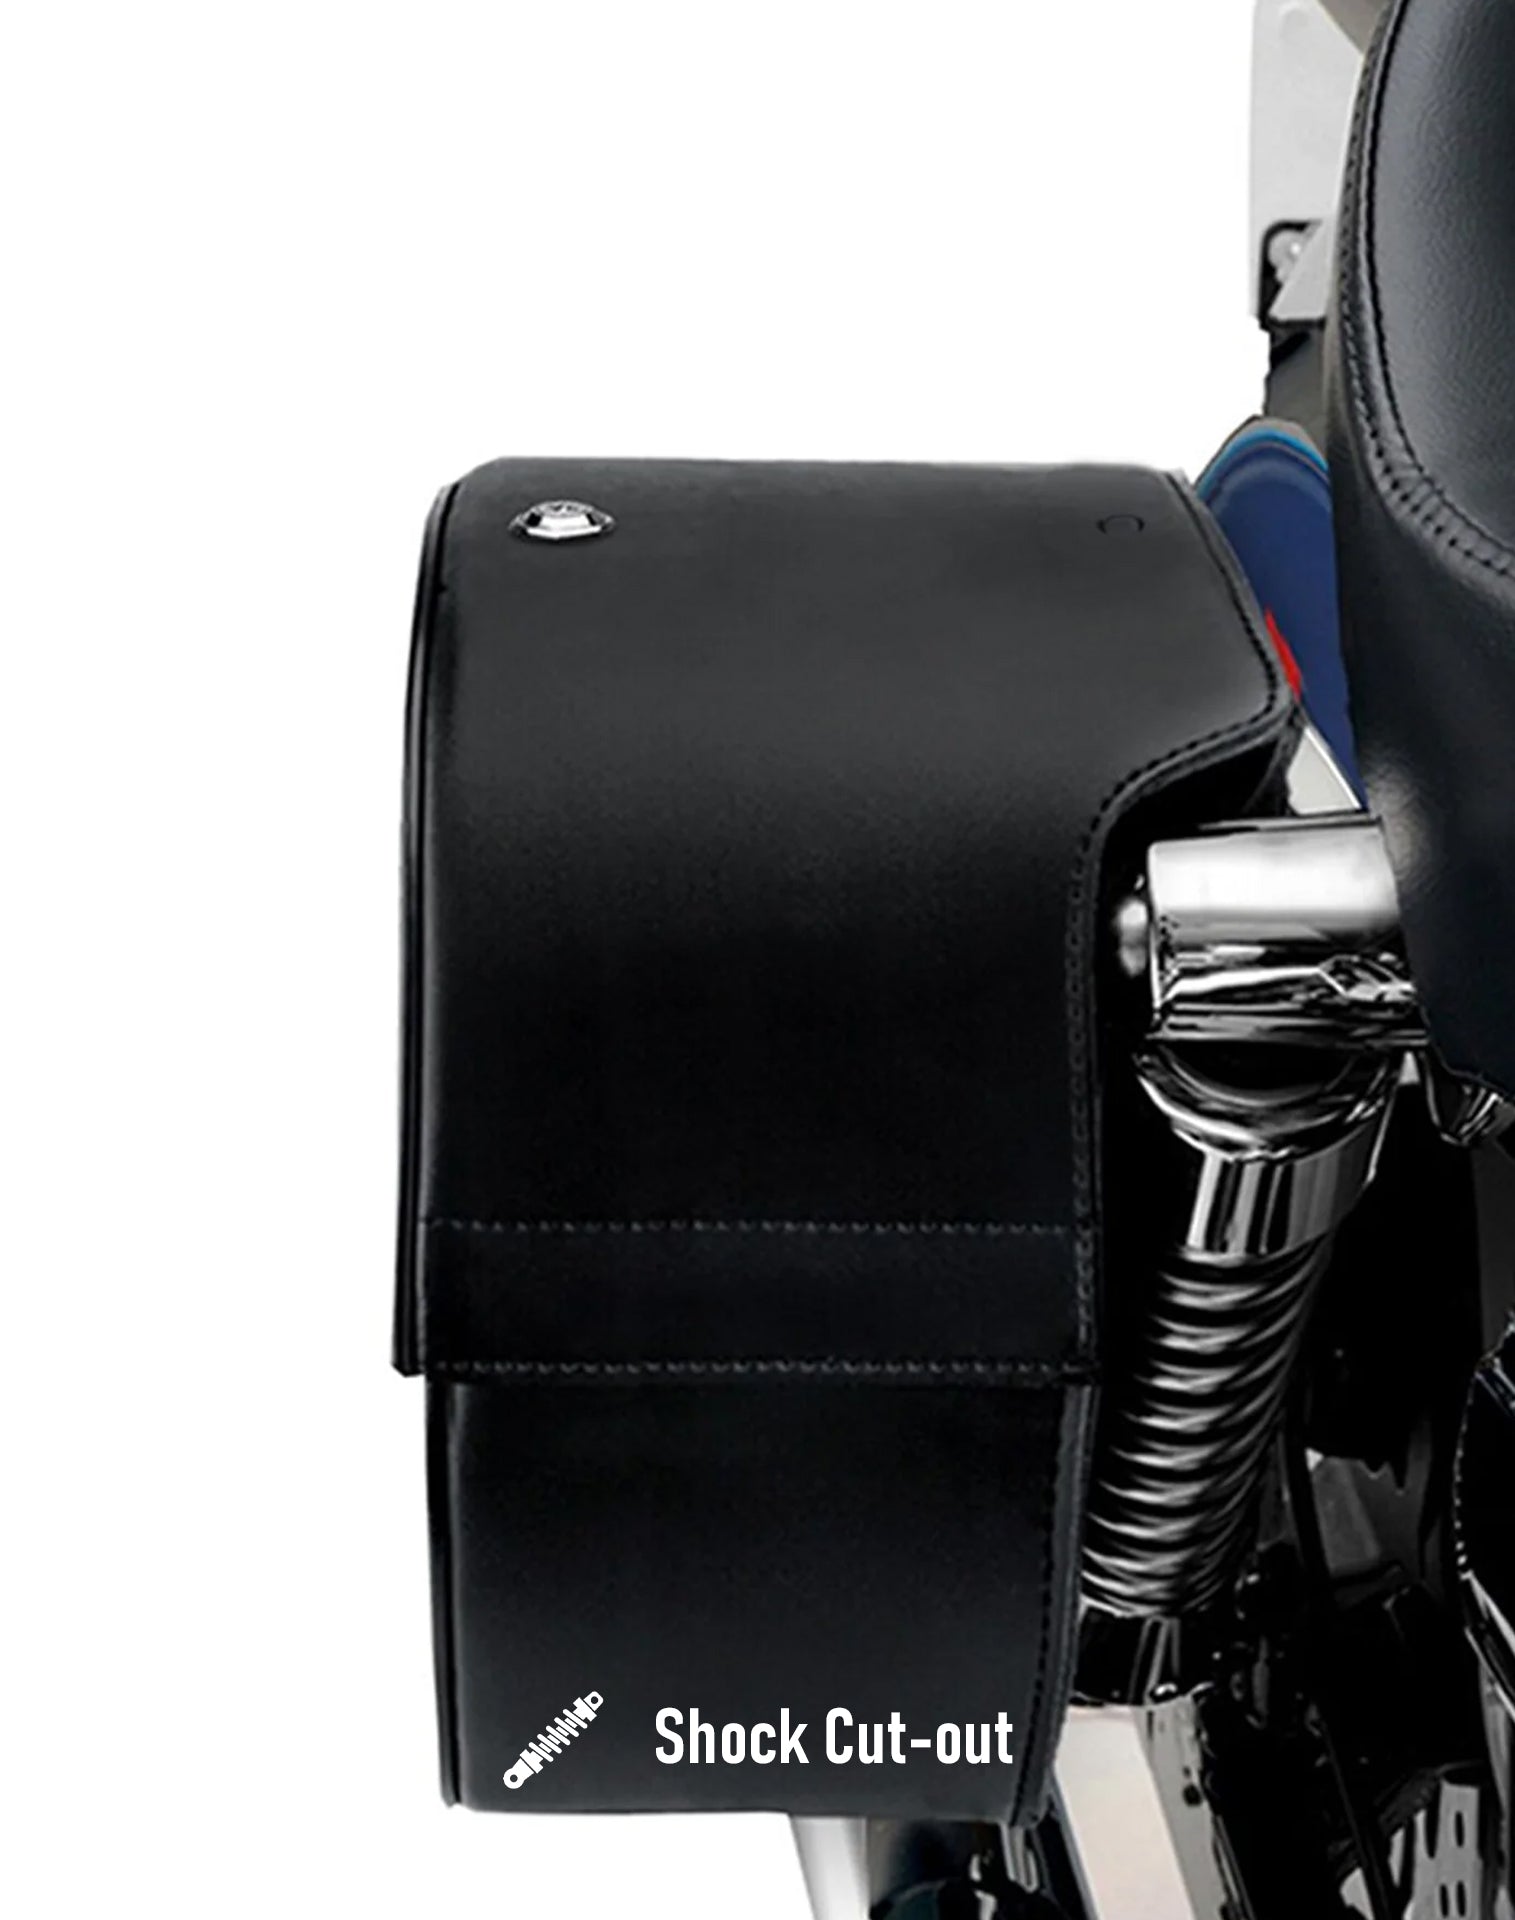 Viking Skarner Large Hyosung Aquila Gv 250 Shock Cut Out Leather Motorcycle Saddlebags Hard Shell Construction